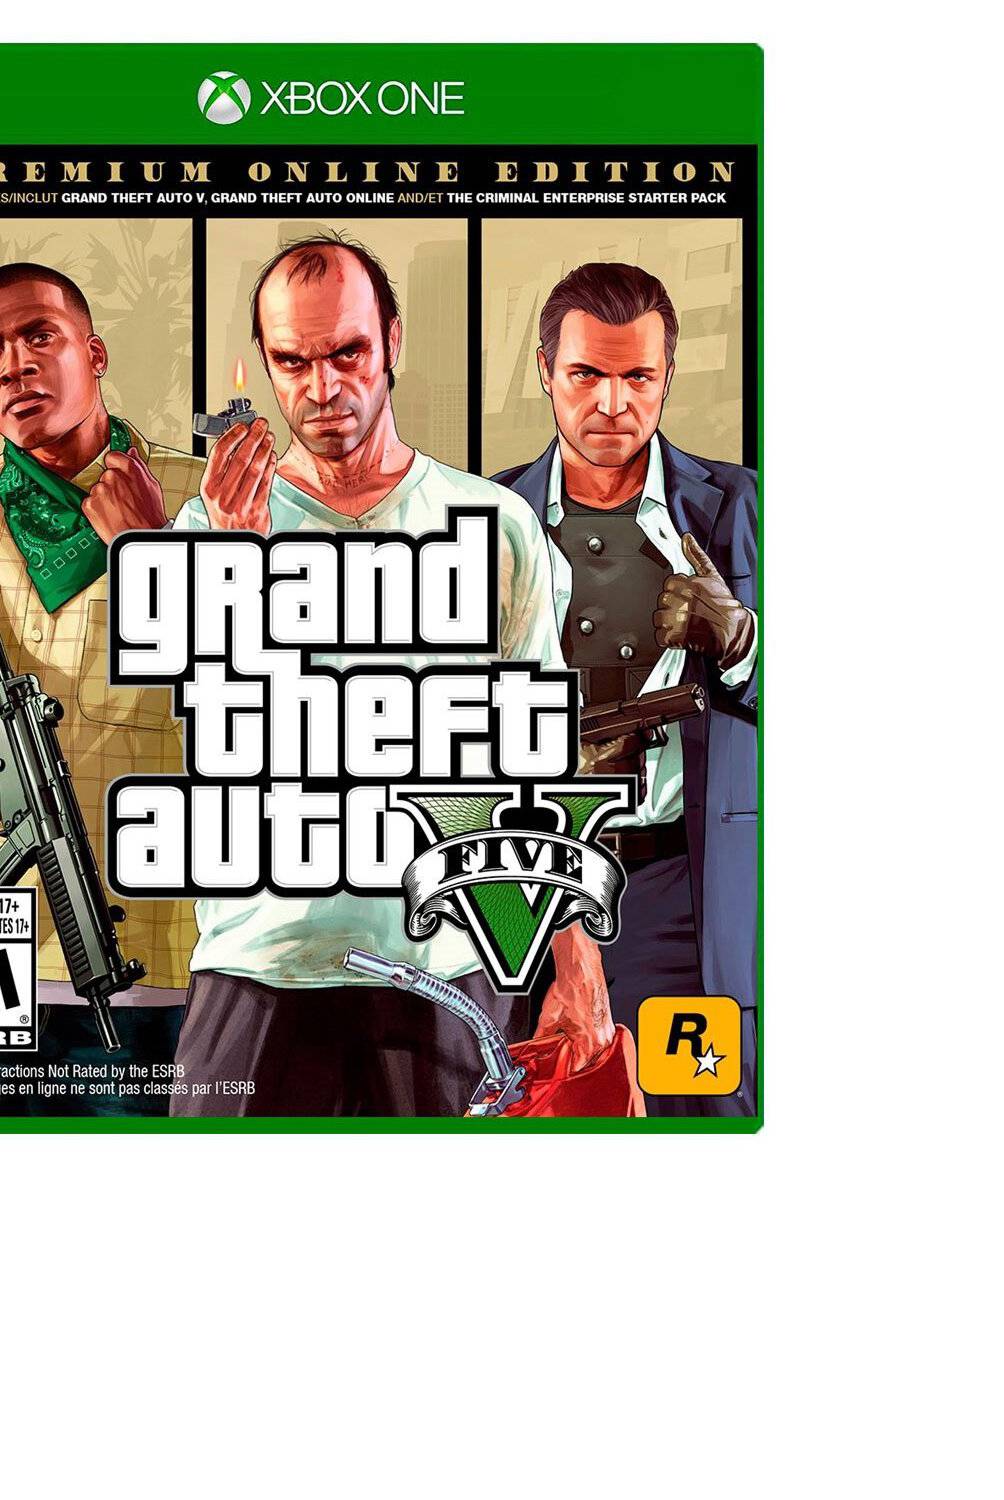 MICROSOFT - Grand Theft Auto V Premium Online Edition (X One)